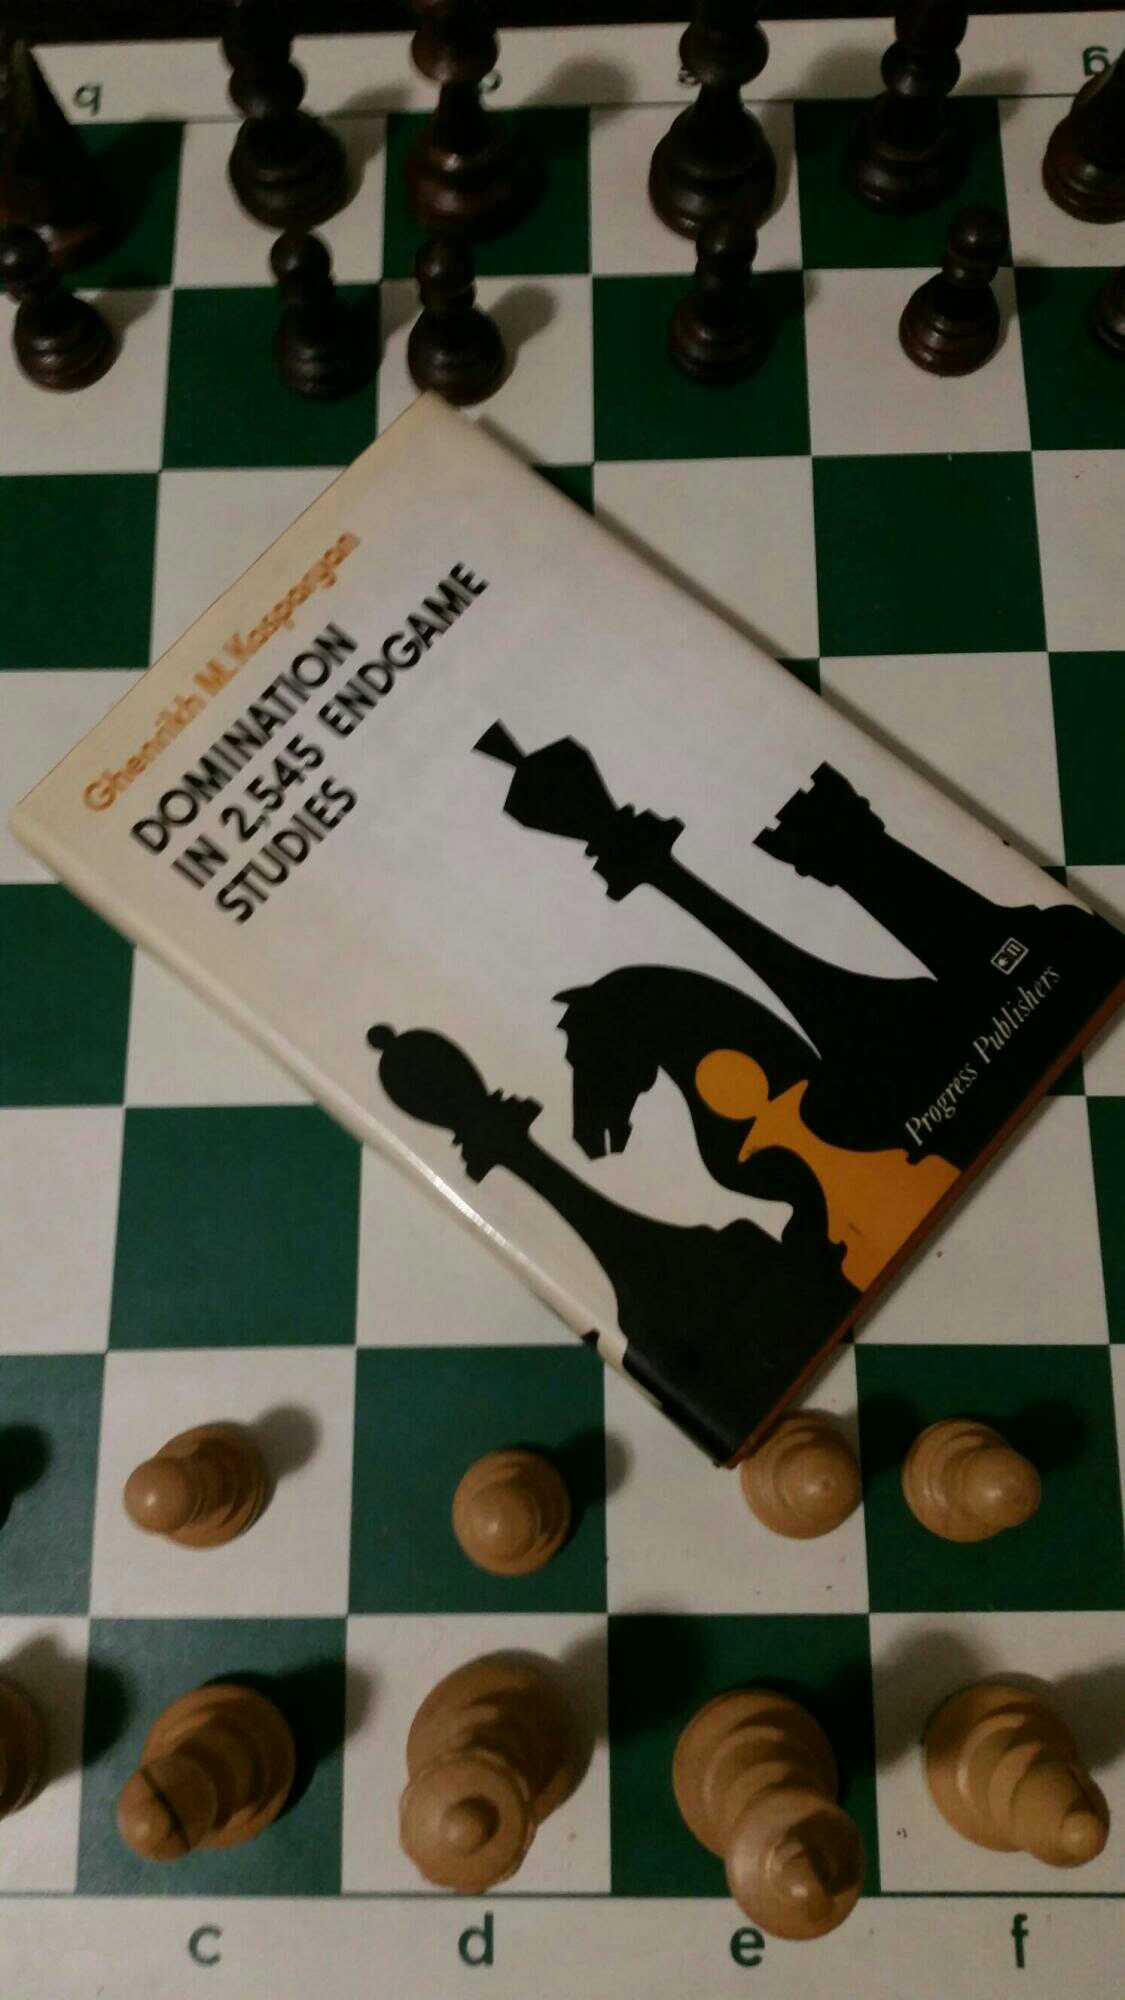 chess books pdf full version